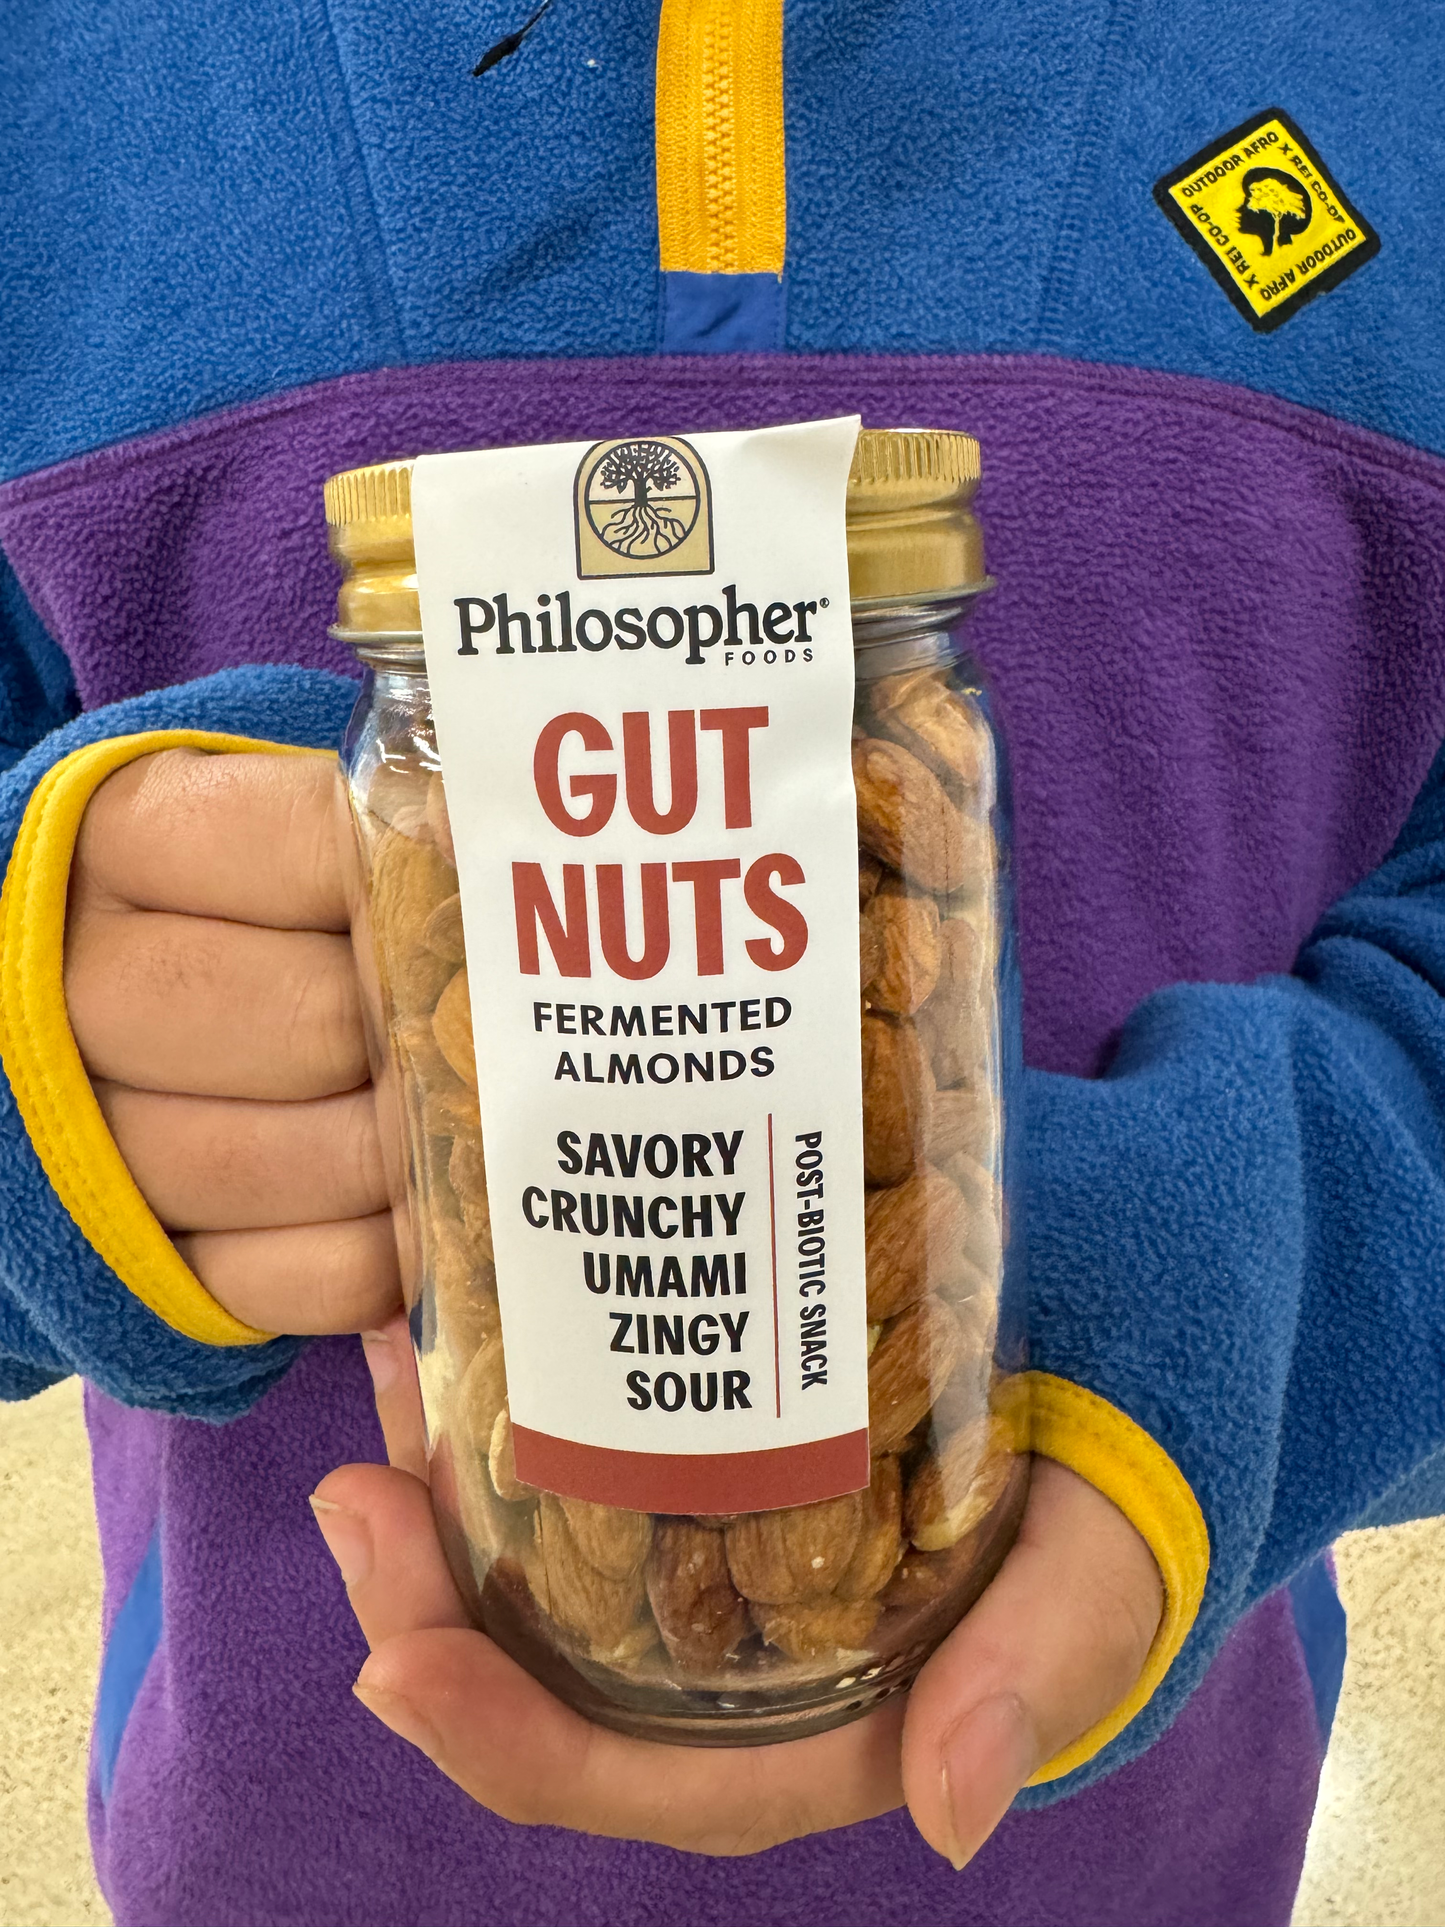 GUT NUTS: FERMENTED ALMONDS